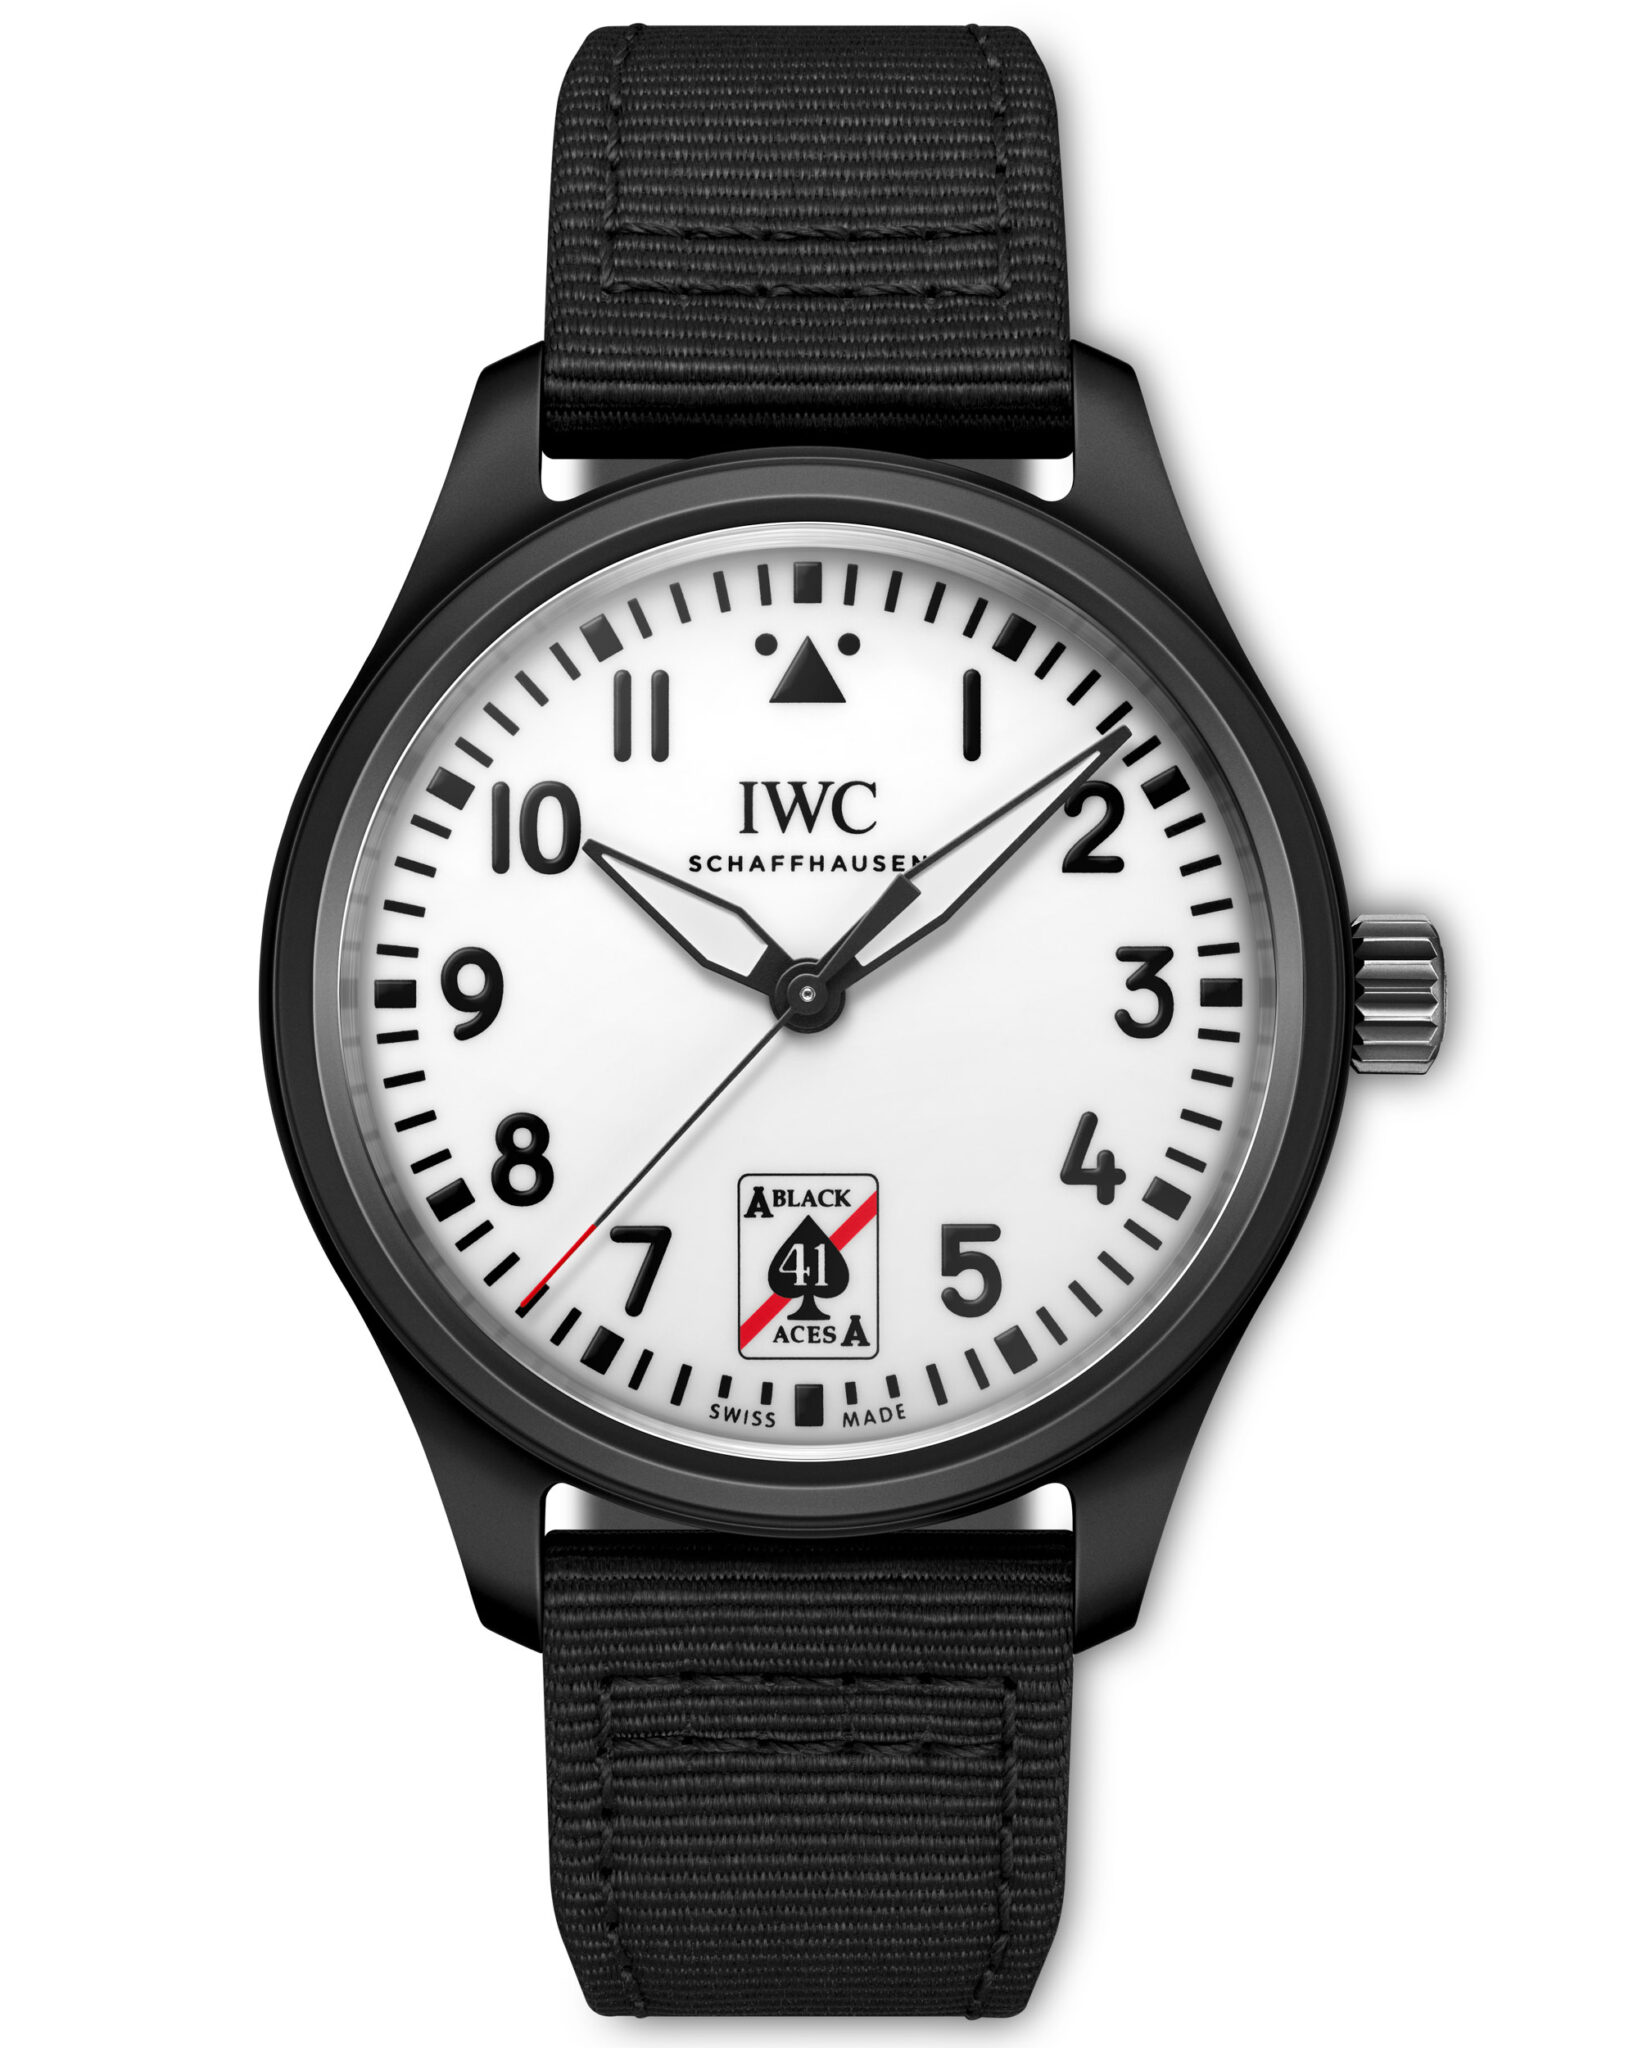 IWC Pilots Watch Black Aces Relojes